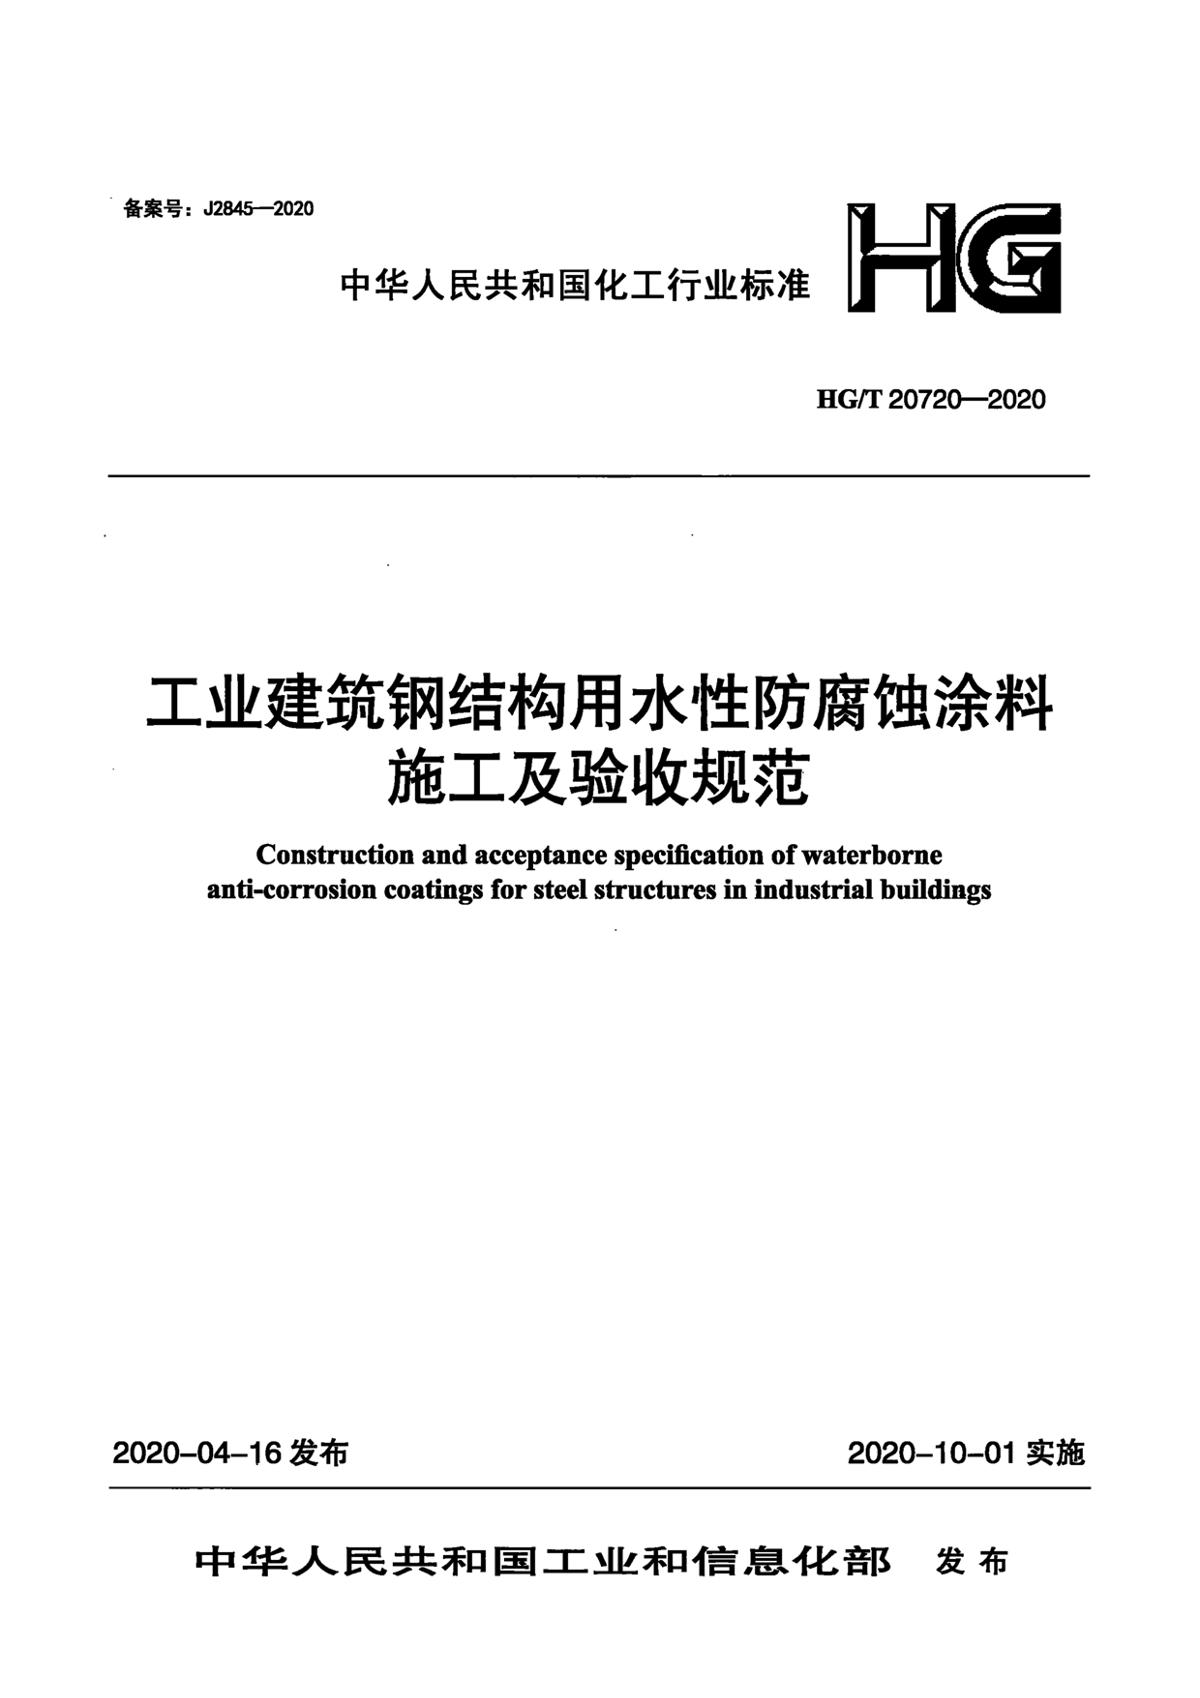 HG/T 20720-2020 《工业建筑钢结构用水性防腐蚀涂料 施工及验收规范》第1页